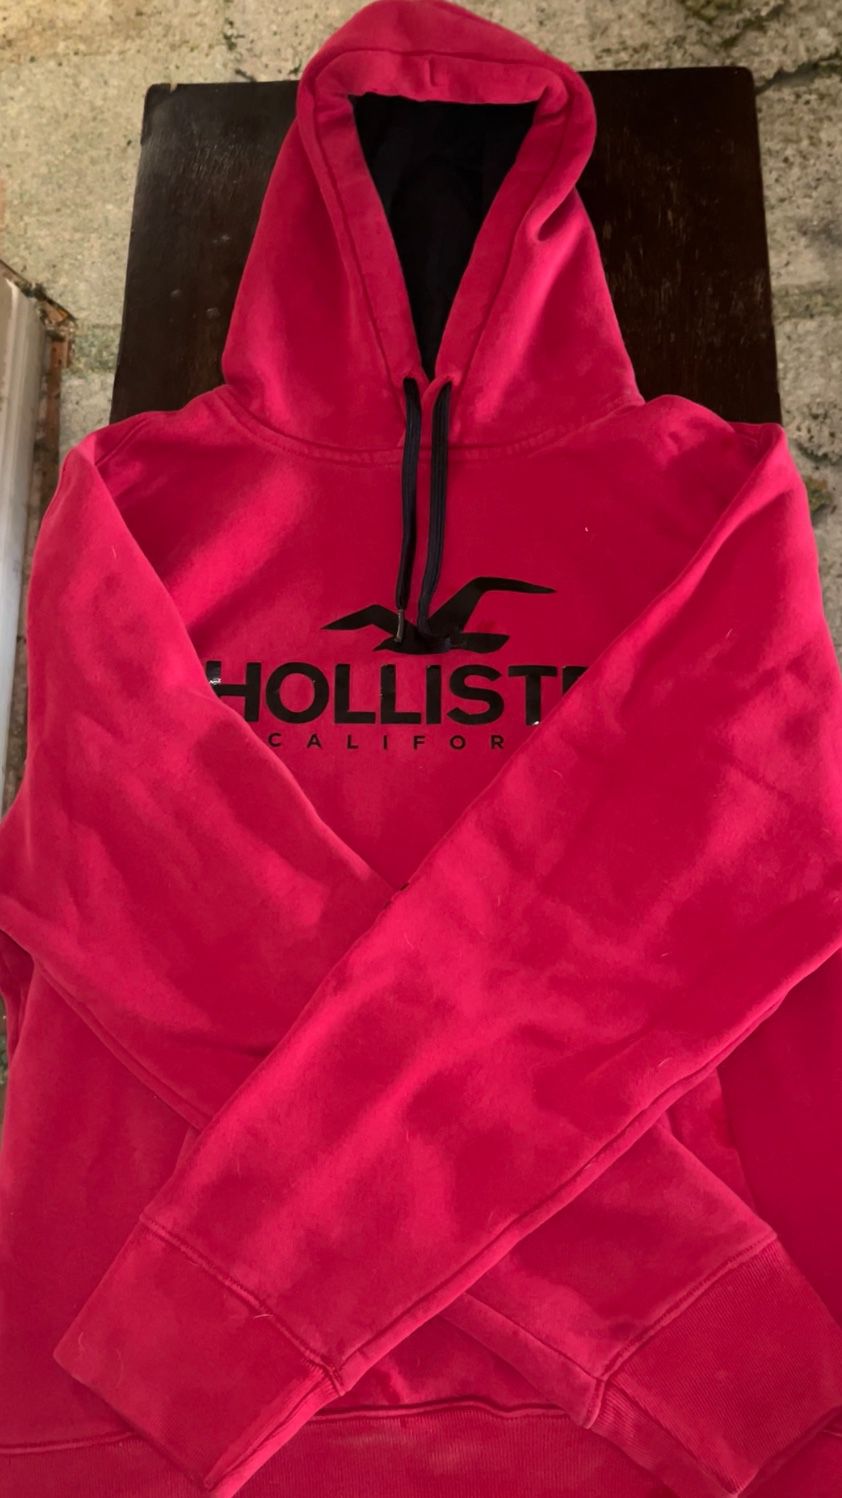 Hollister “California” Hoodie XL